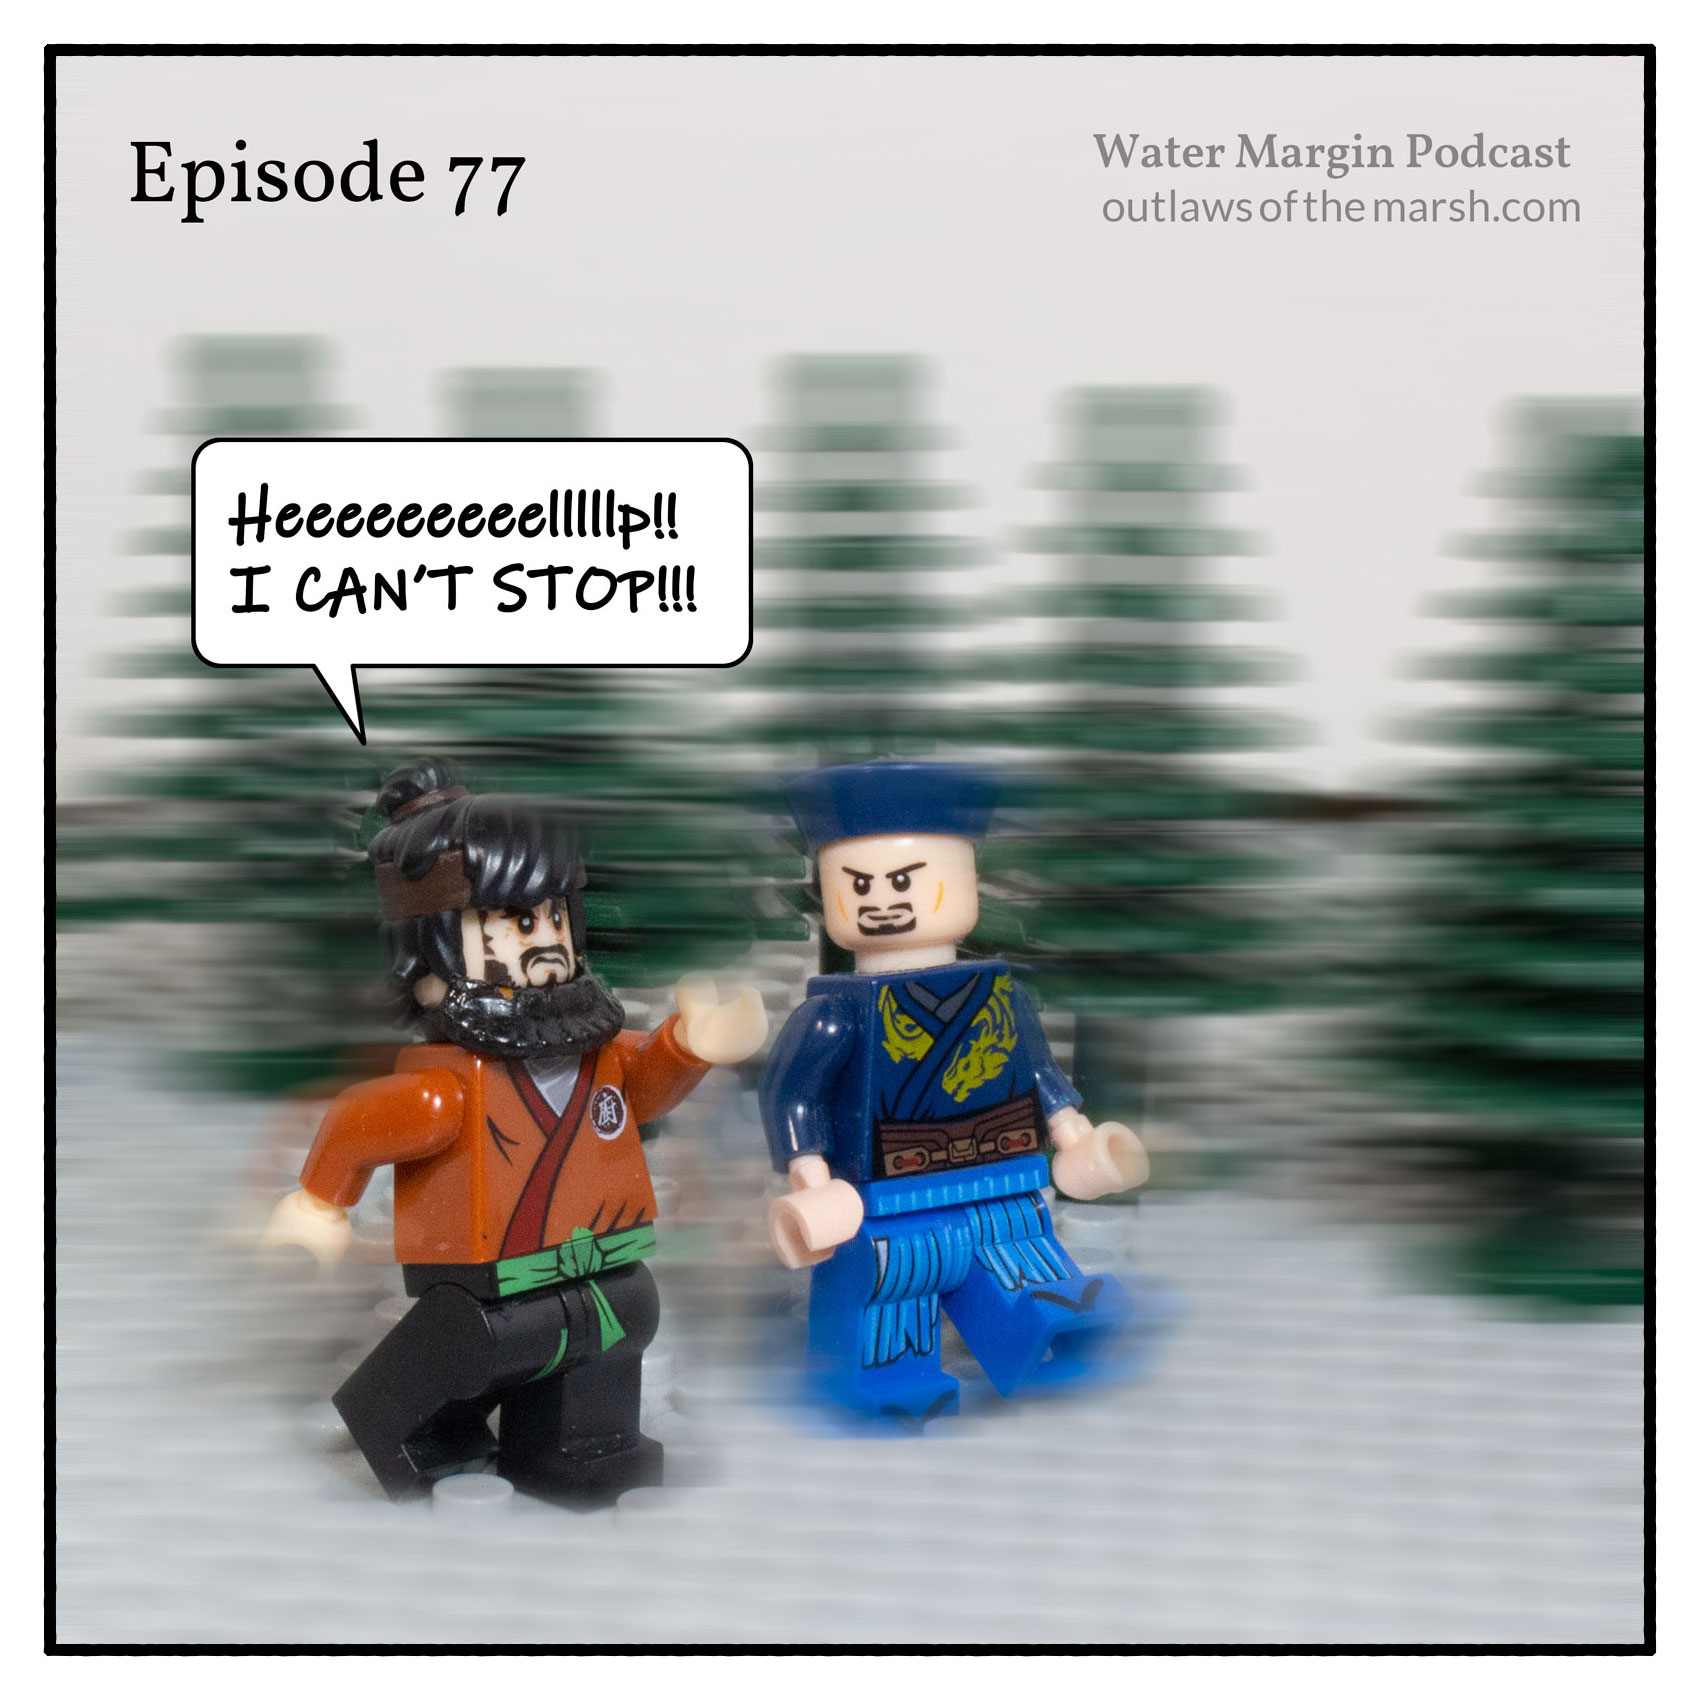 Water Margin Podcast: Episode 077